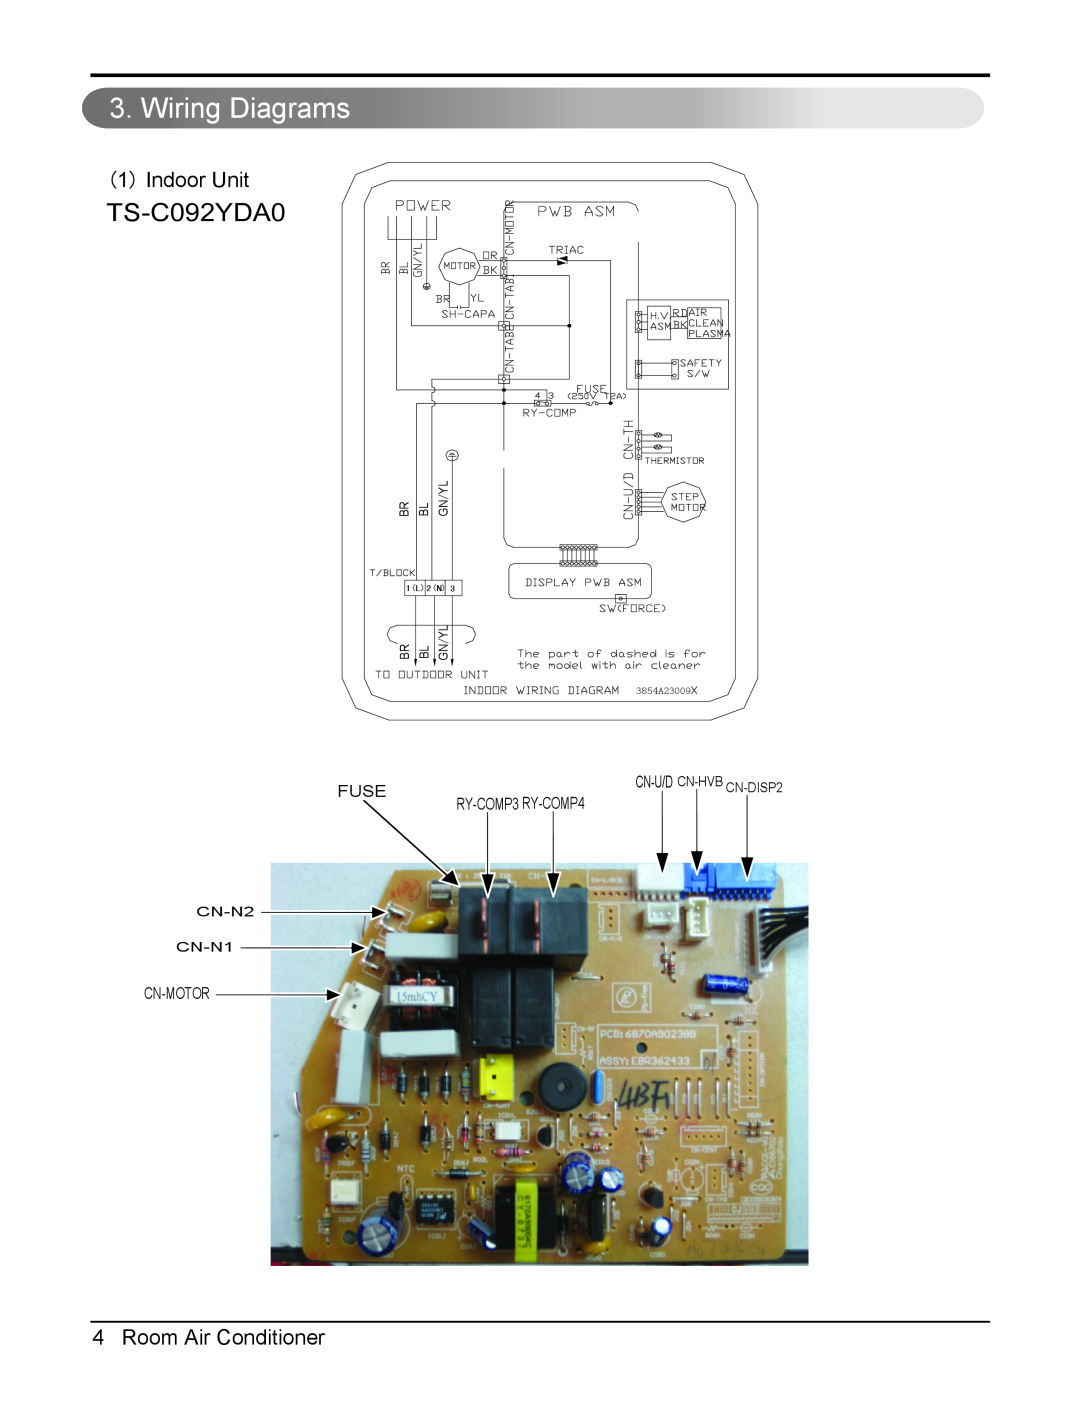 LG Electronics TS-C092YDA0 manual Indoor Unit, Room Air Conditioner, Wiring Diagrams, CN-N2 CN-N1, Cn-U/D Cn-Hvb, 1L2N 